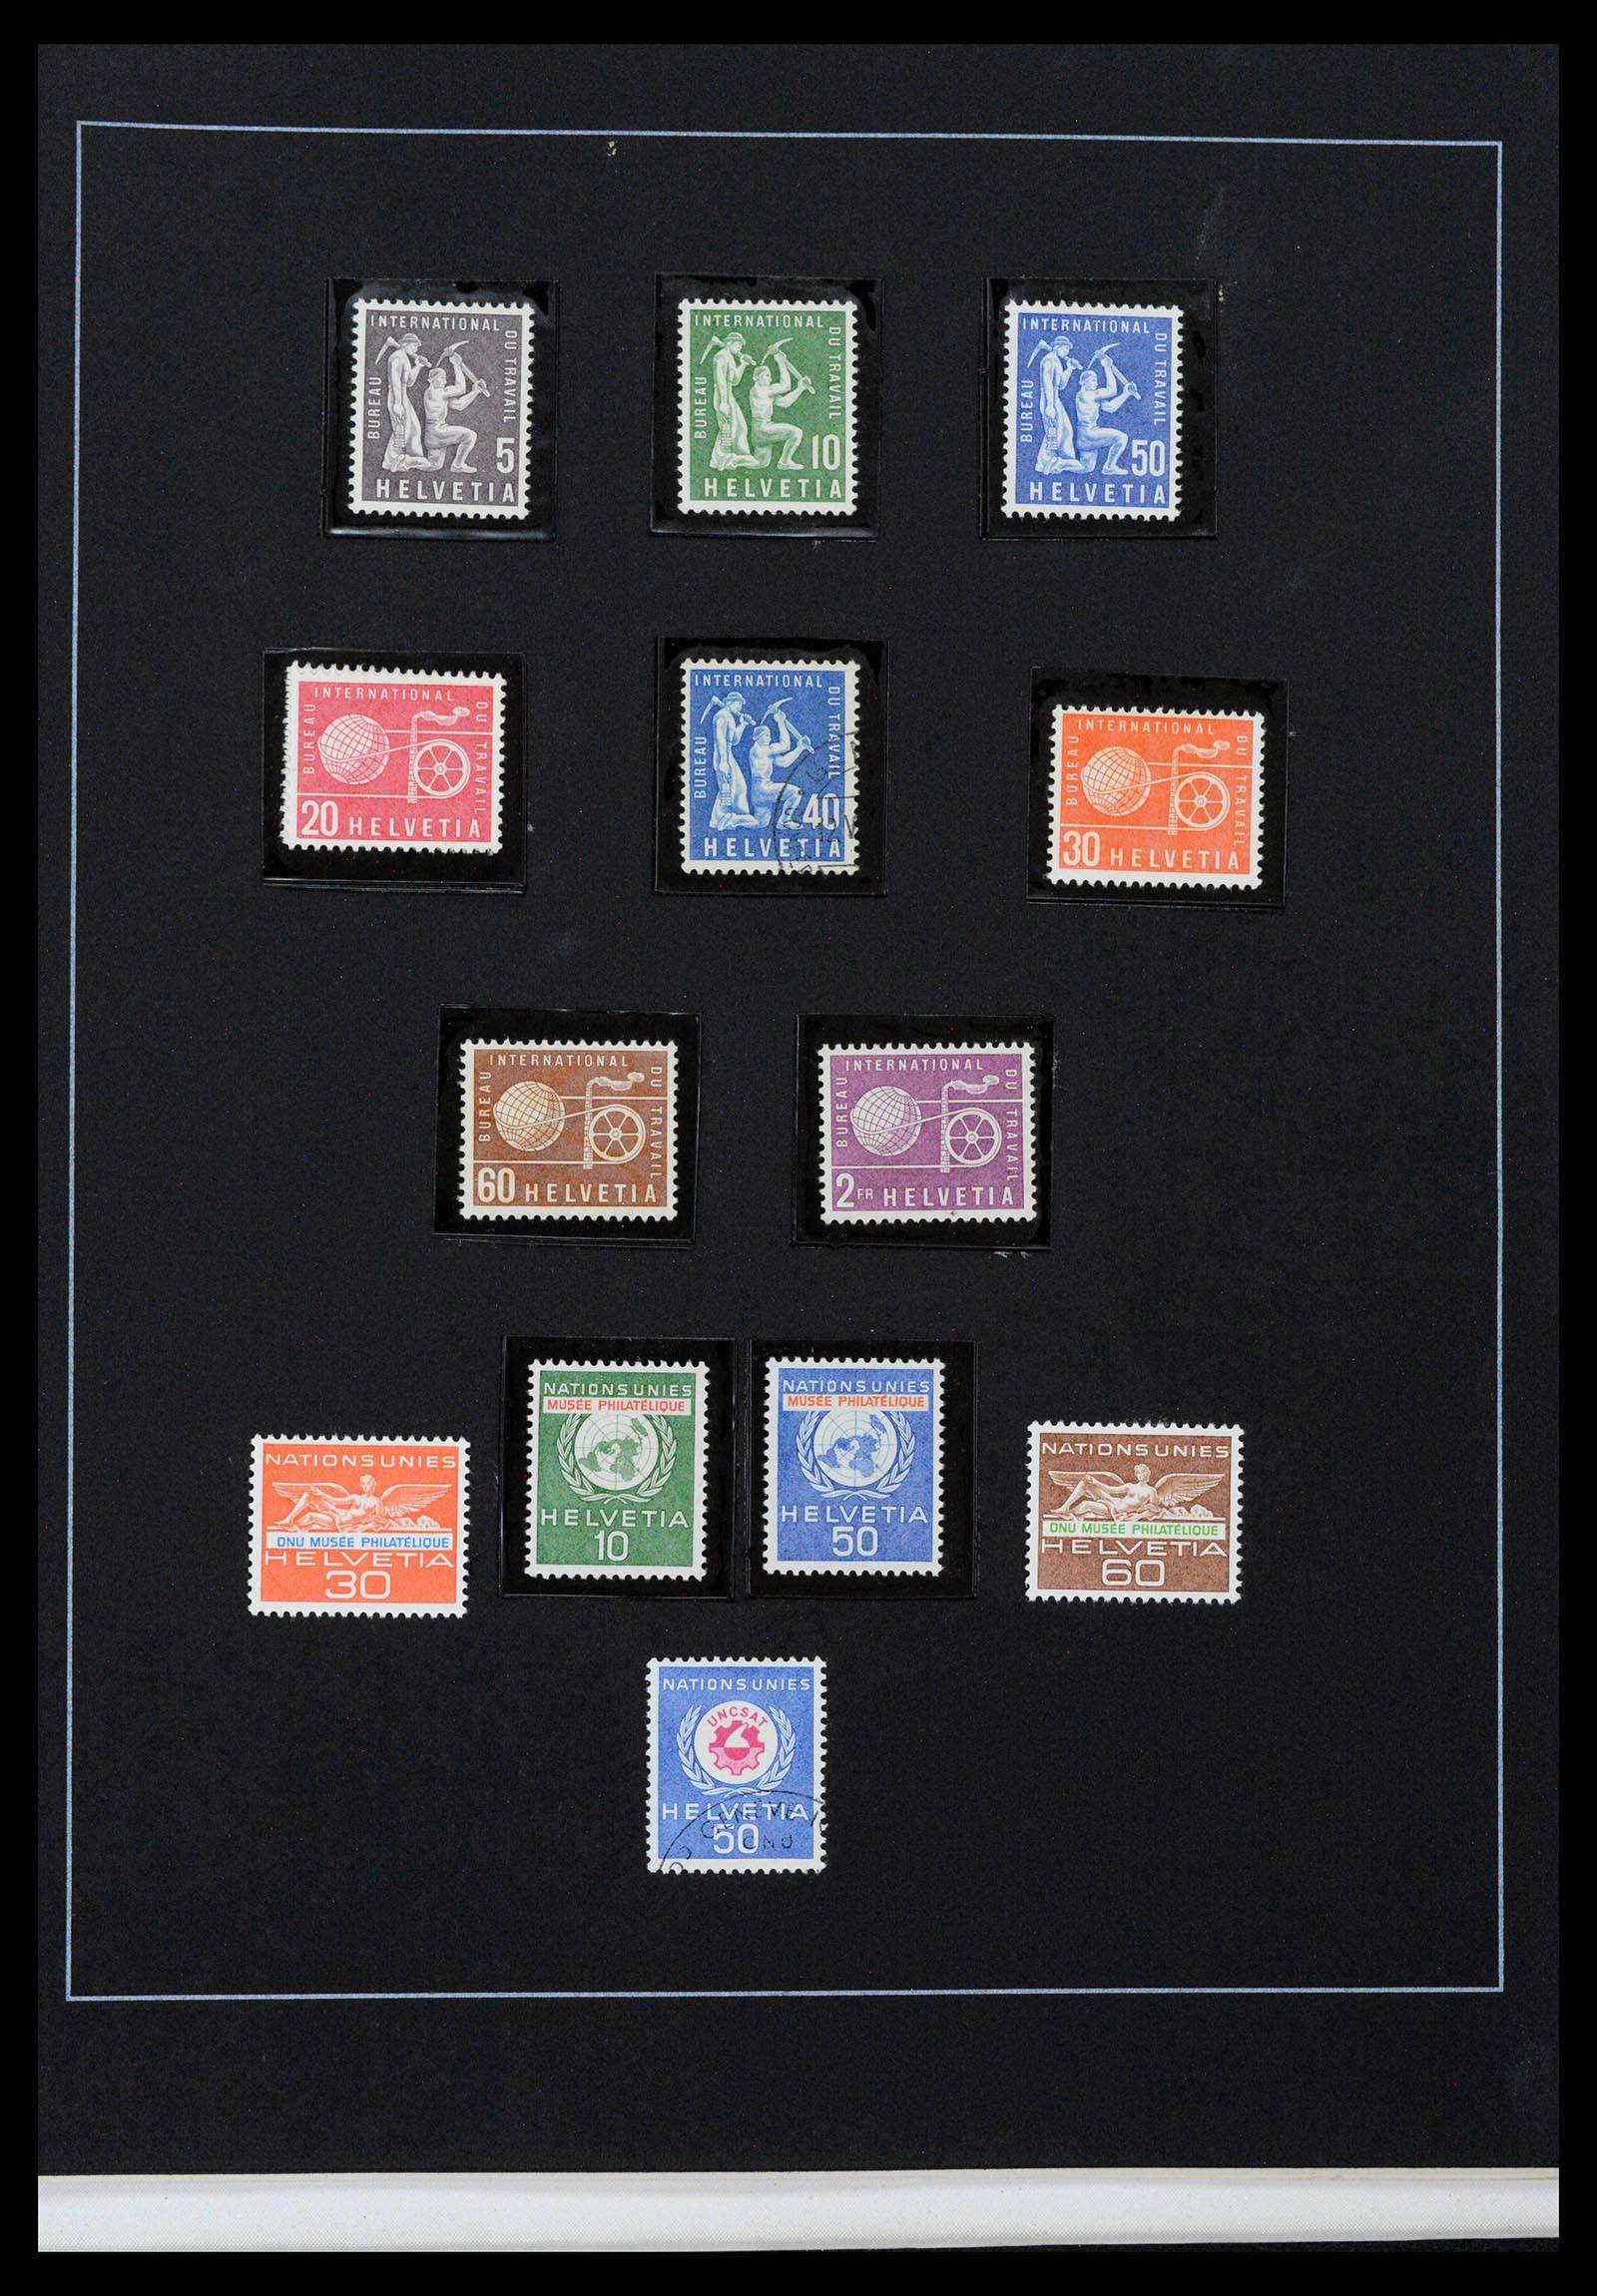 39235 0084 - Stamp collection 39235 Switzerland 1843-1960.